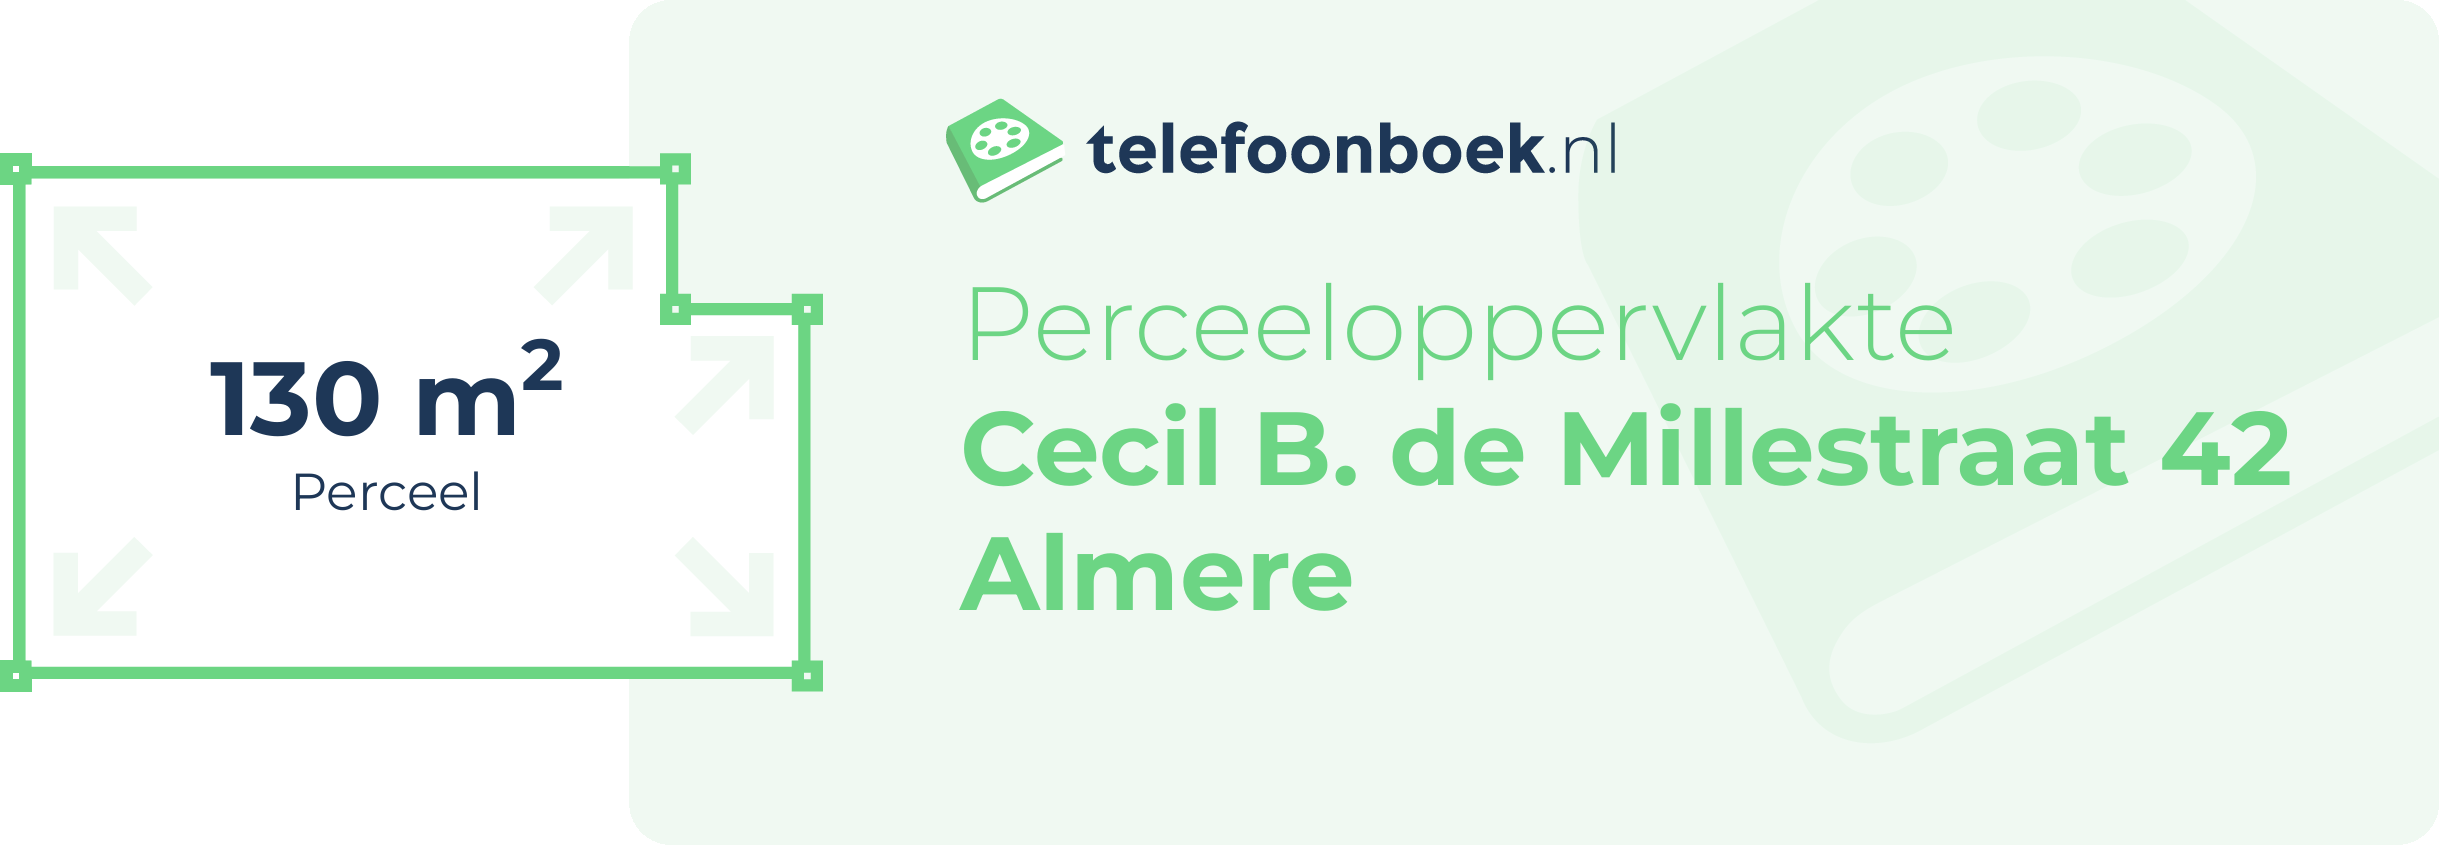 Perceeloppervlakte Cecil B. De Millestraat 42 Almere